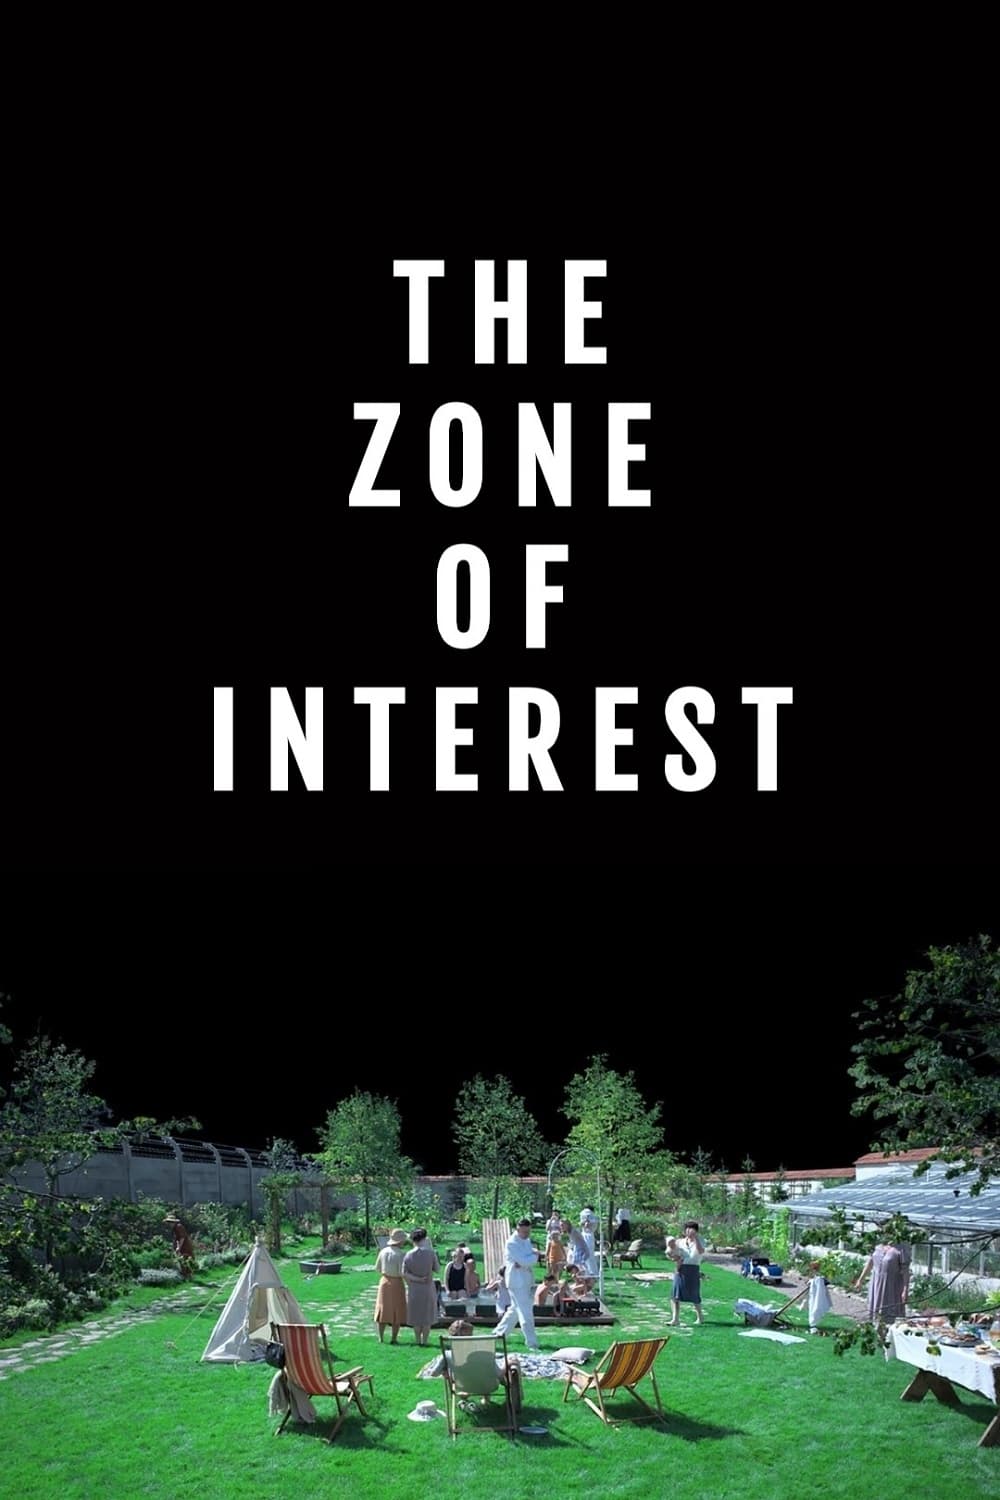 “The Zone of Interest” by Jonathan Glazer